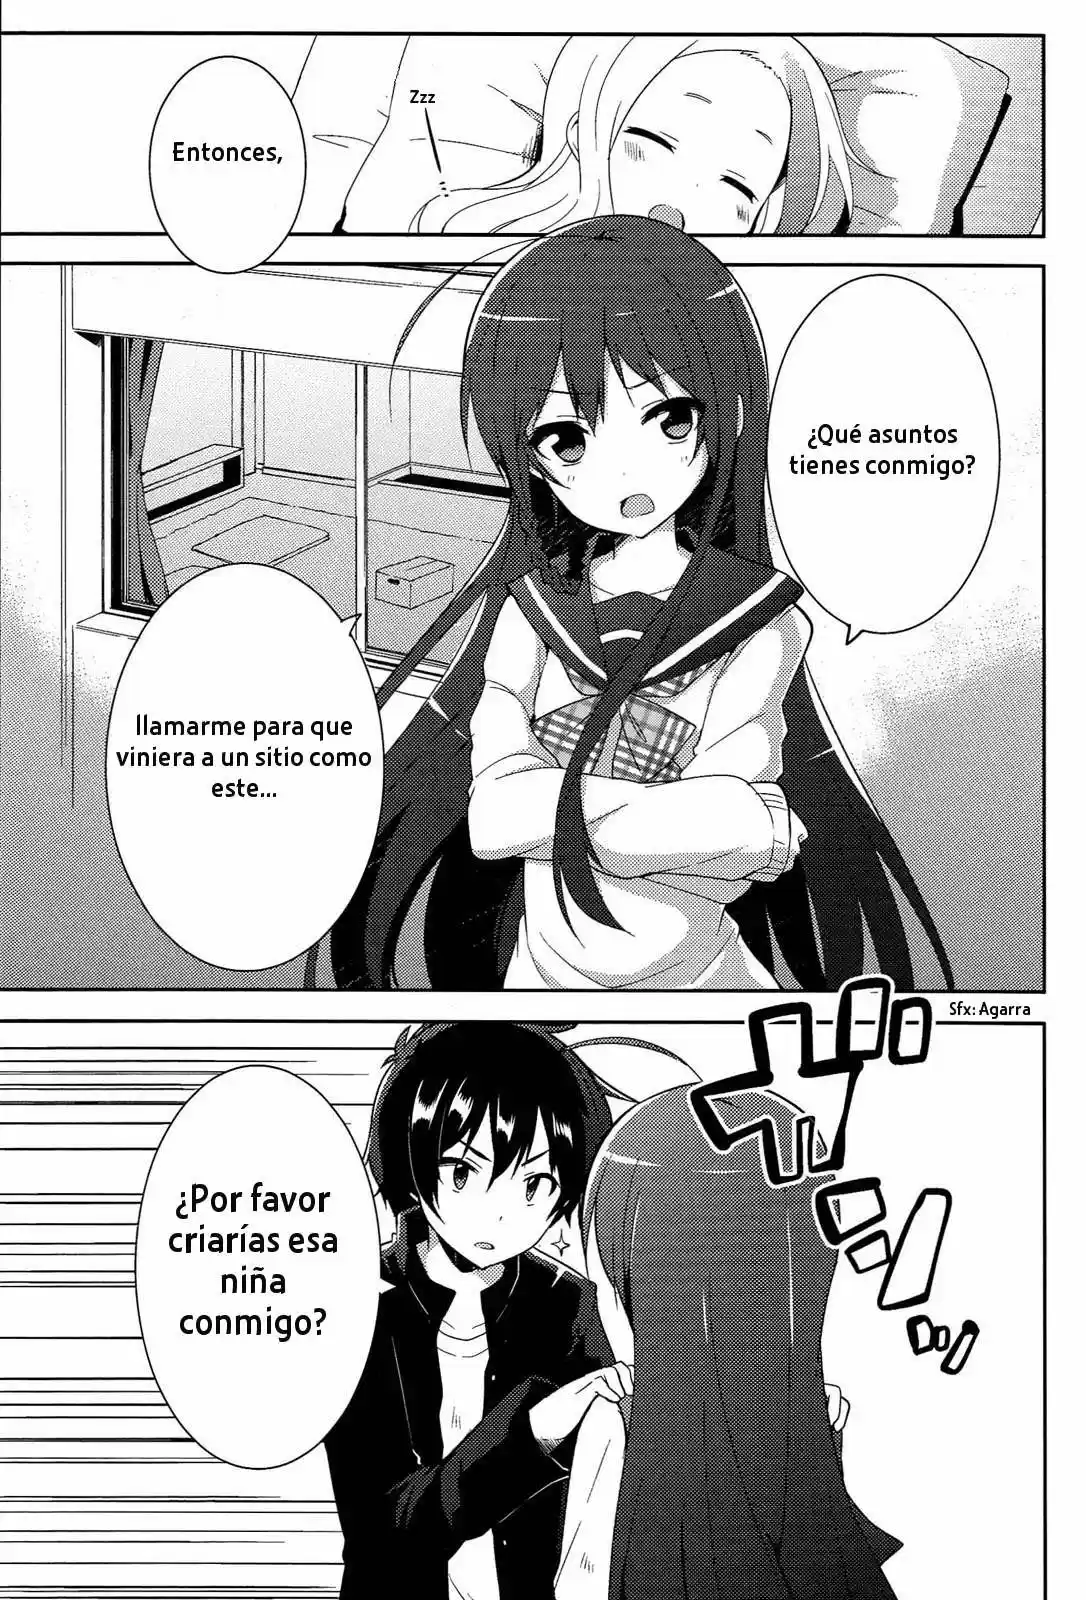 Hataraku Maousama- High School: Chapter 10 - Page 1